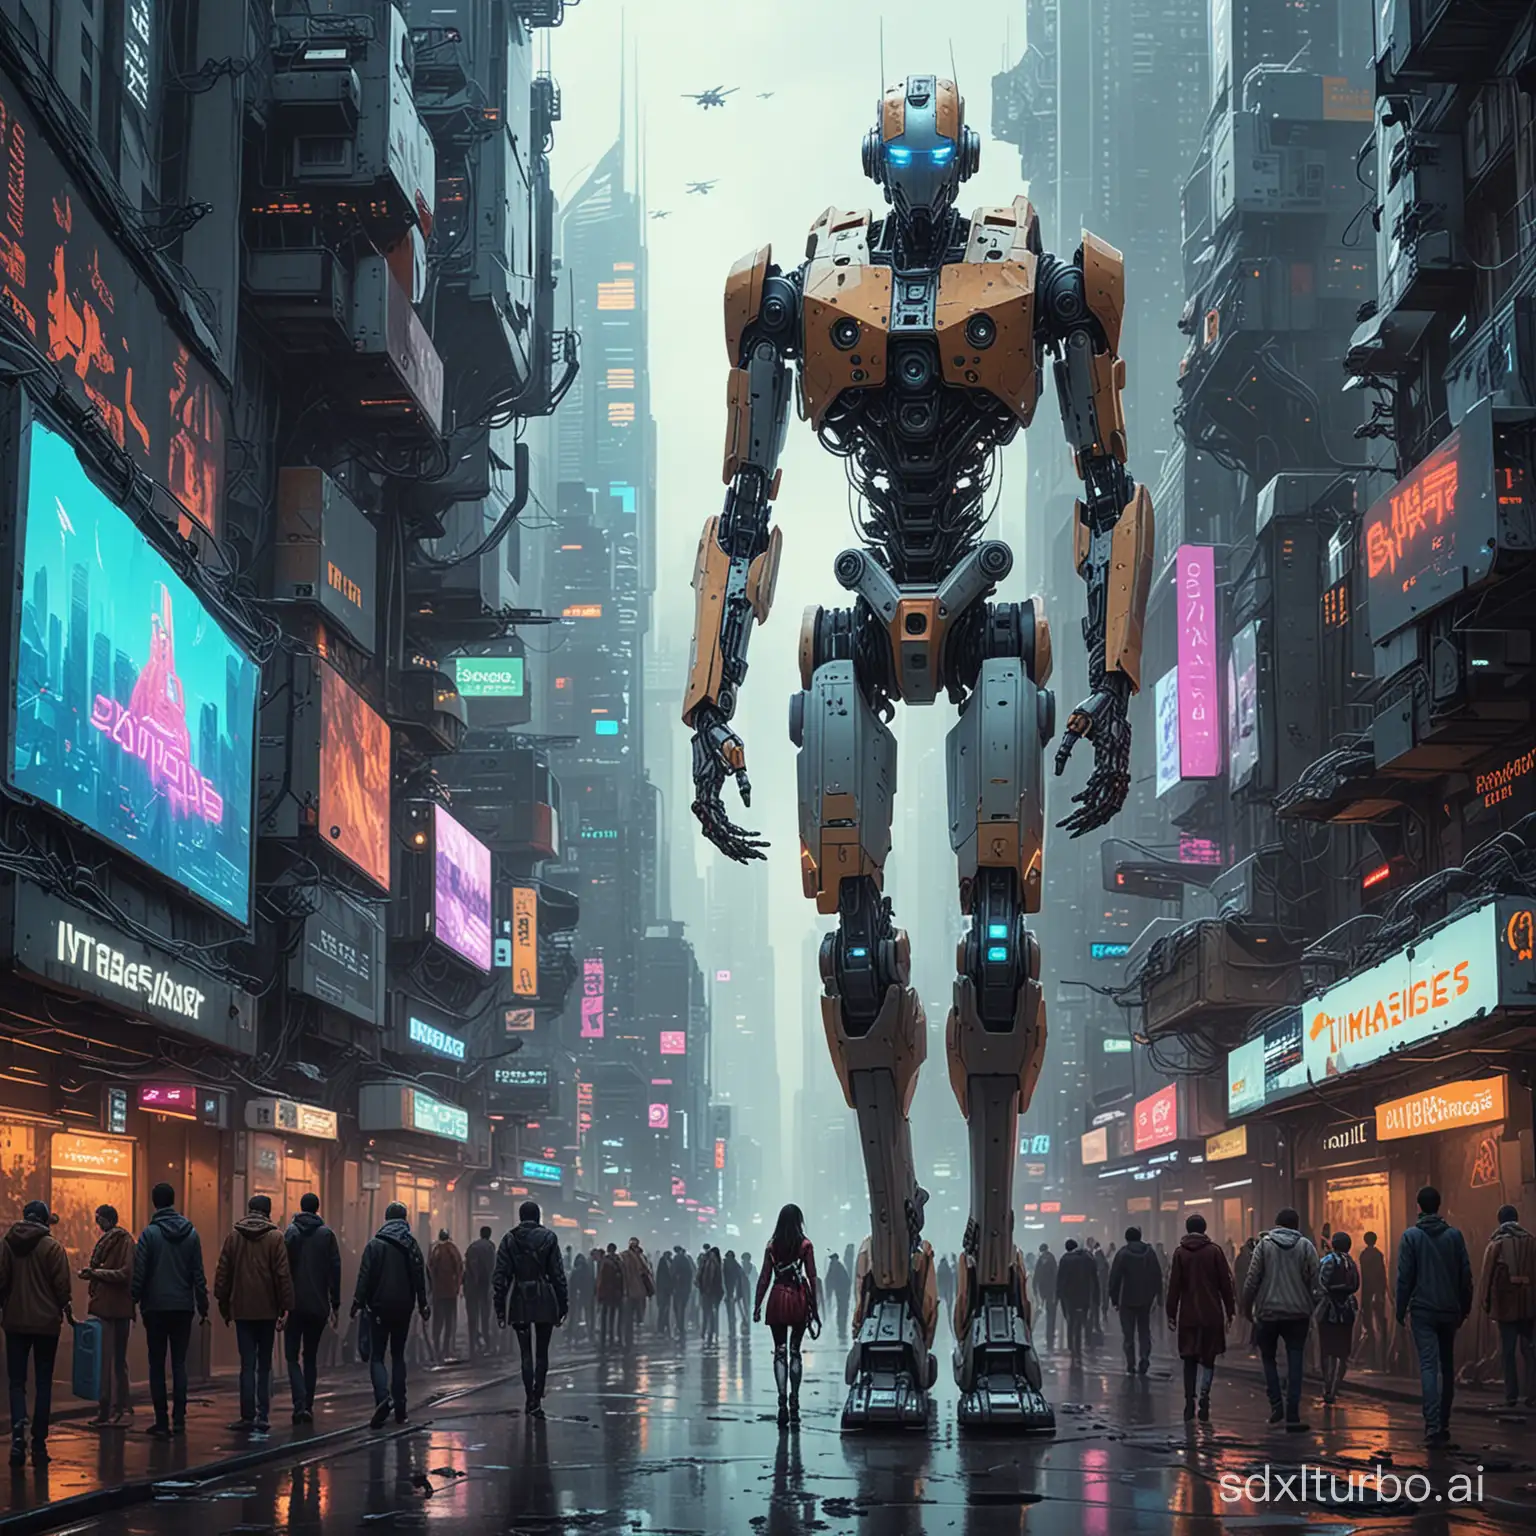 Futuristic-Cyberpunk-City-with-Harmonious-HumanRobot-Coexistence